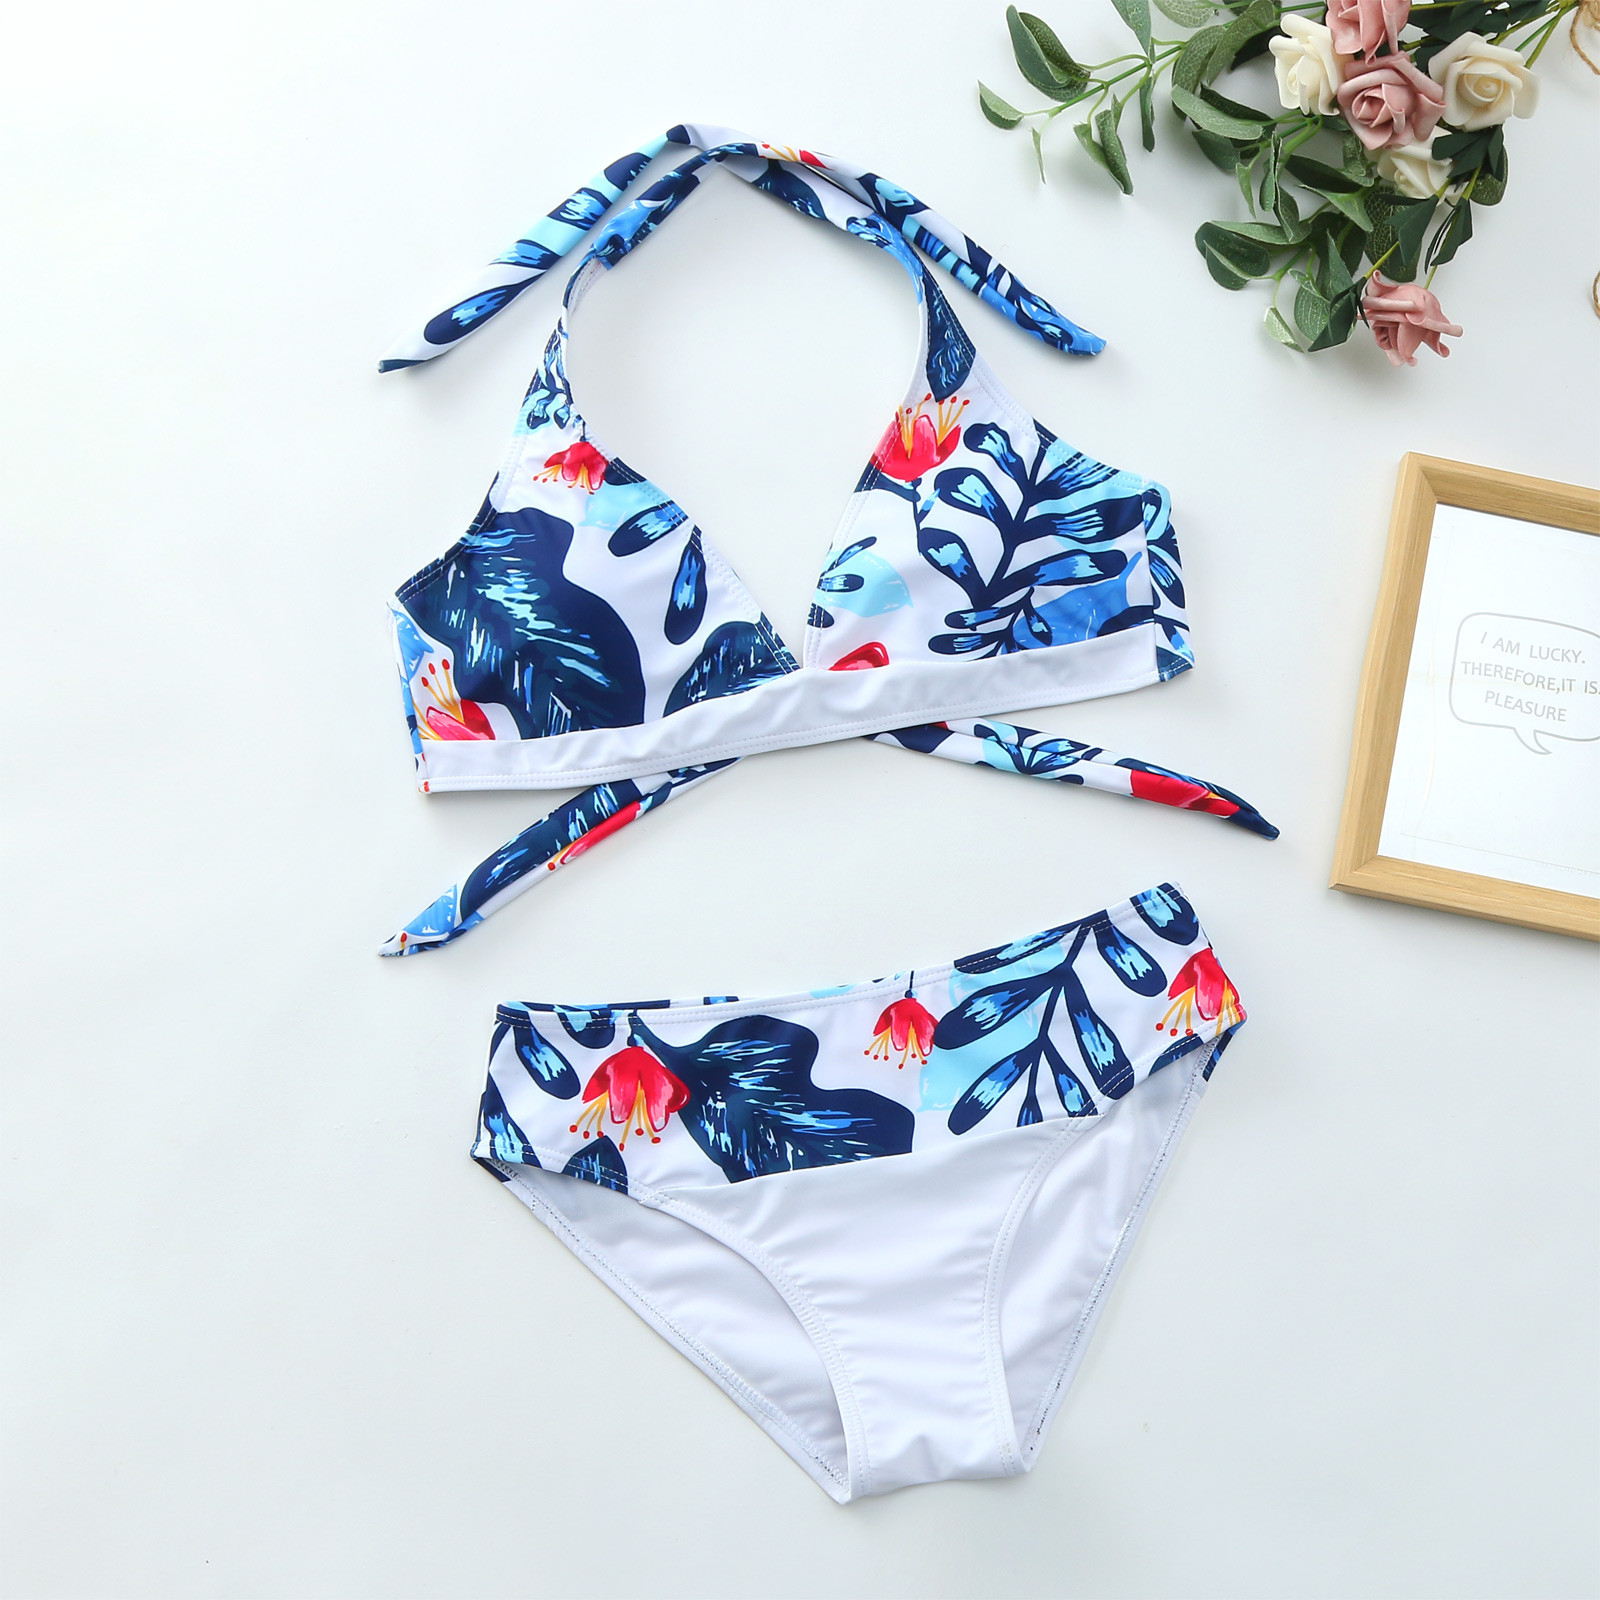 asdoklhq Plus Size Swimsuit Clearance Under $10,Women Flower Printing ...